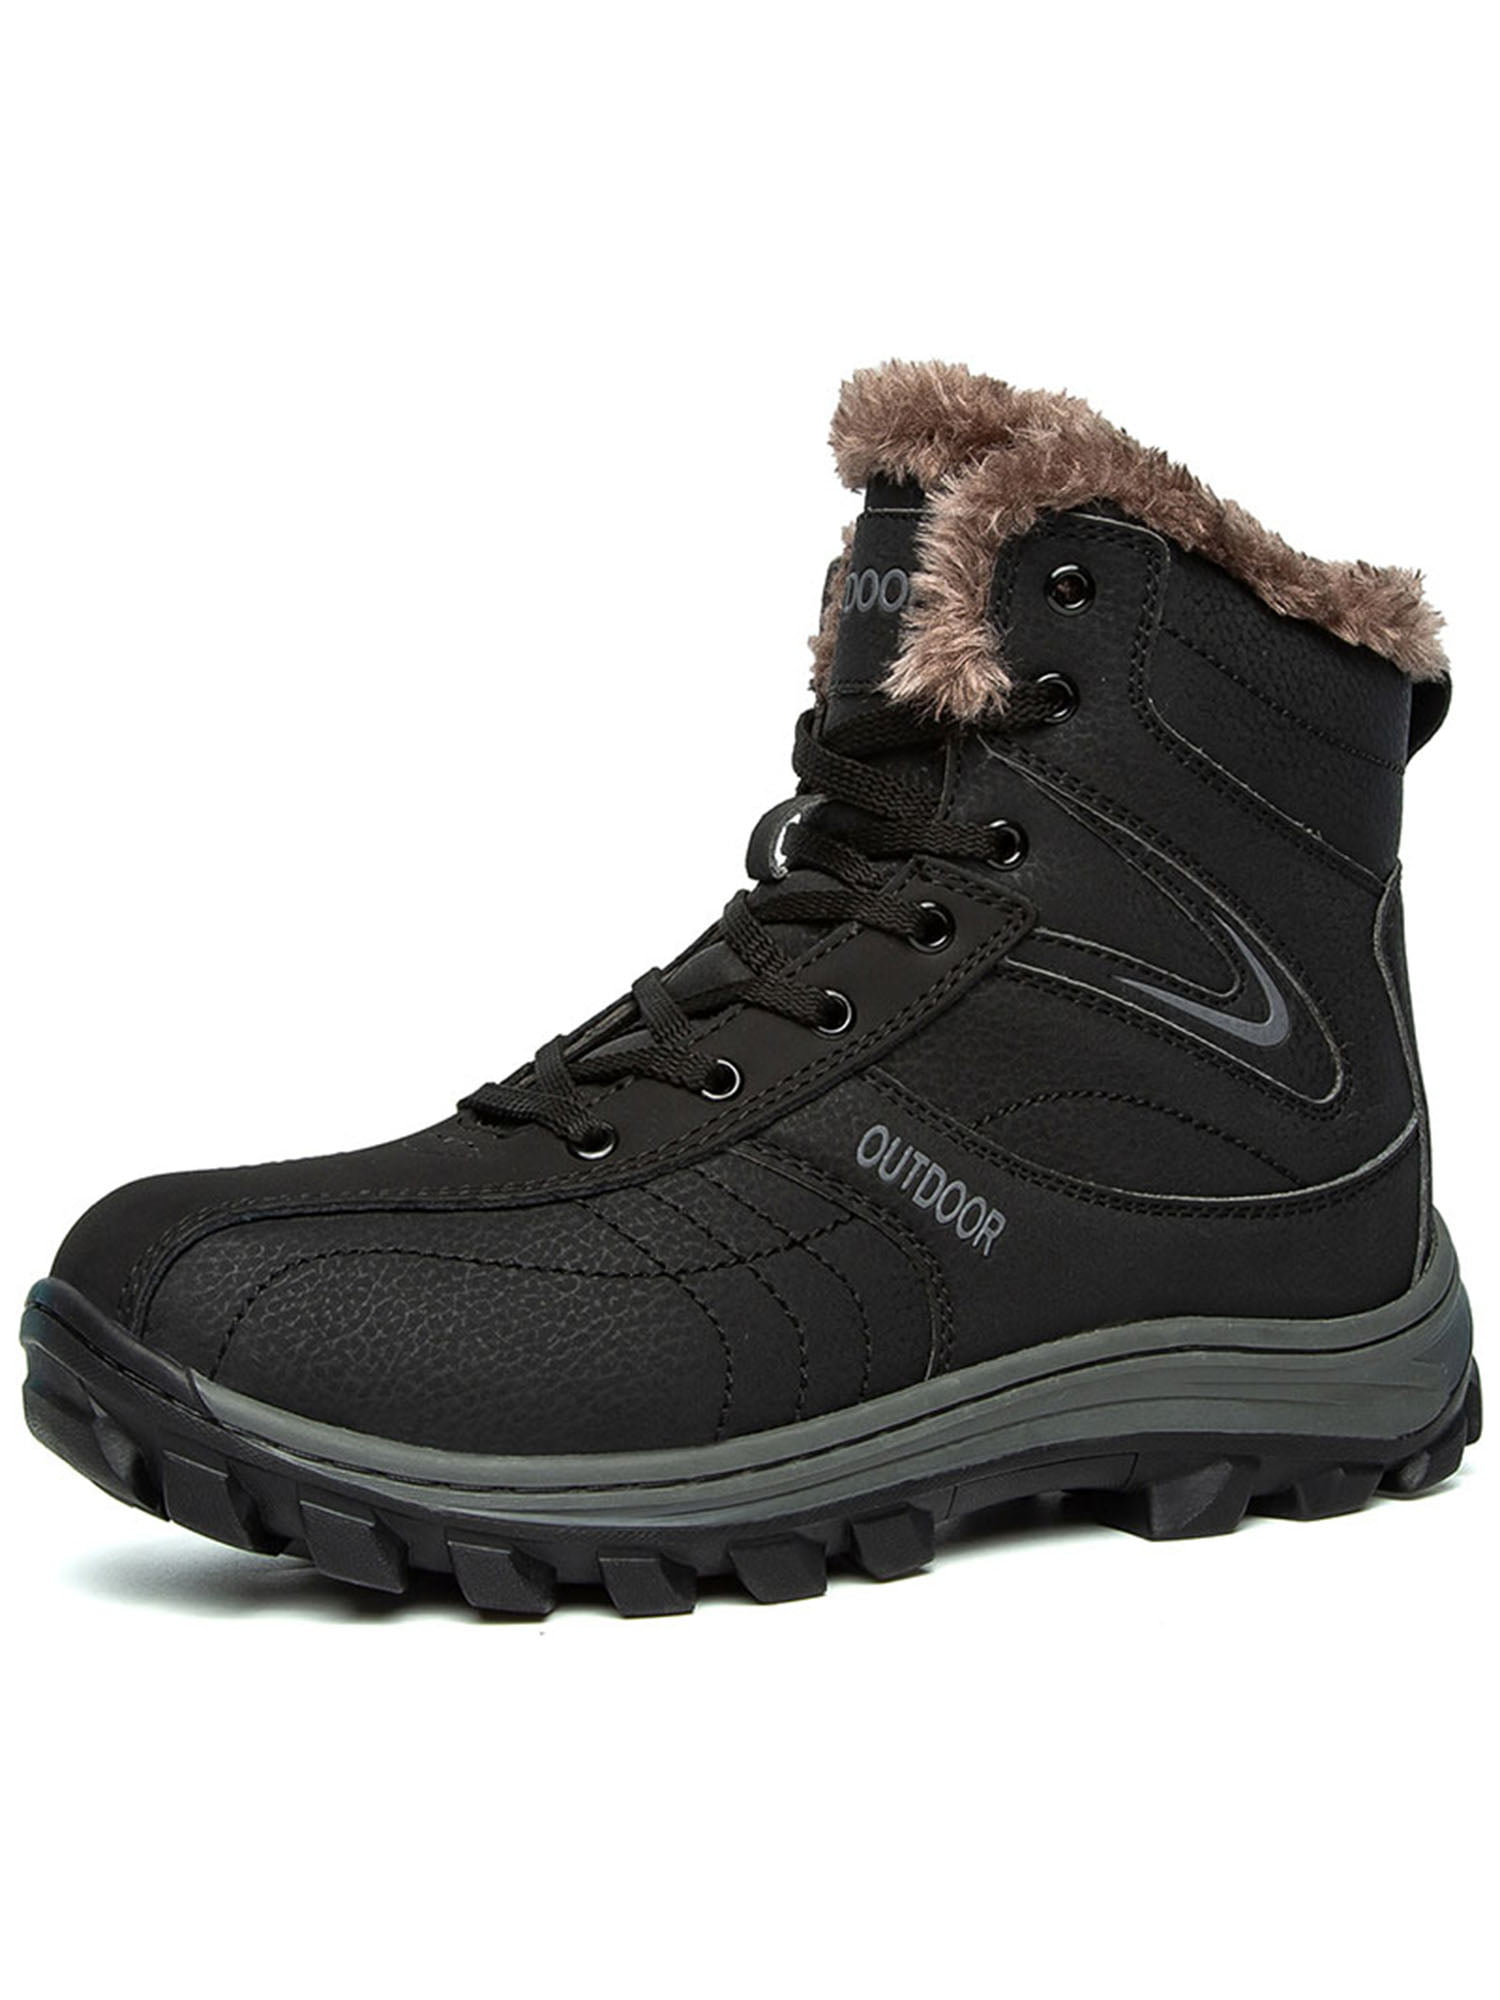 Mens Winter Snow Boots Waterproof Warm Insulated Non Slip Outdoorworke Trekking Ankle Bootie Thicken Fur Hiking Shoes 